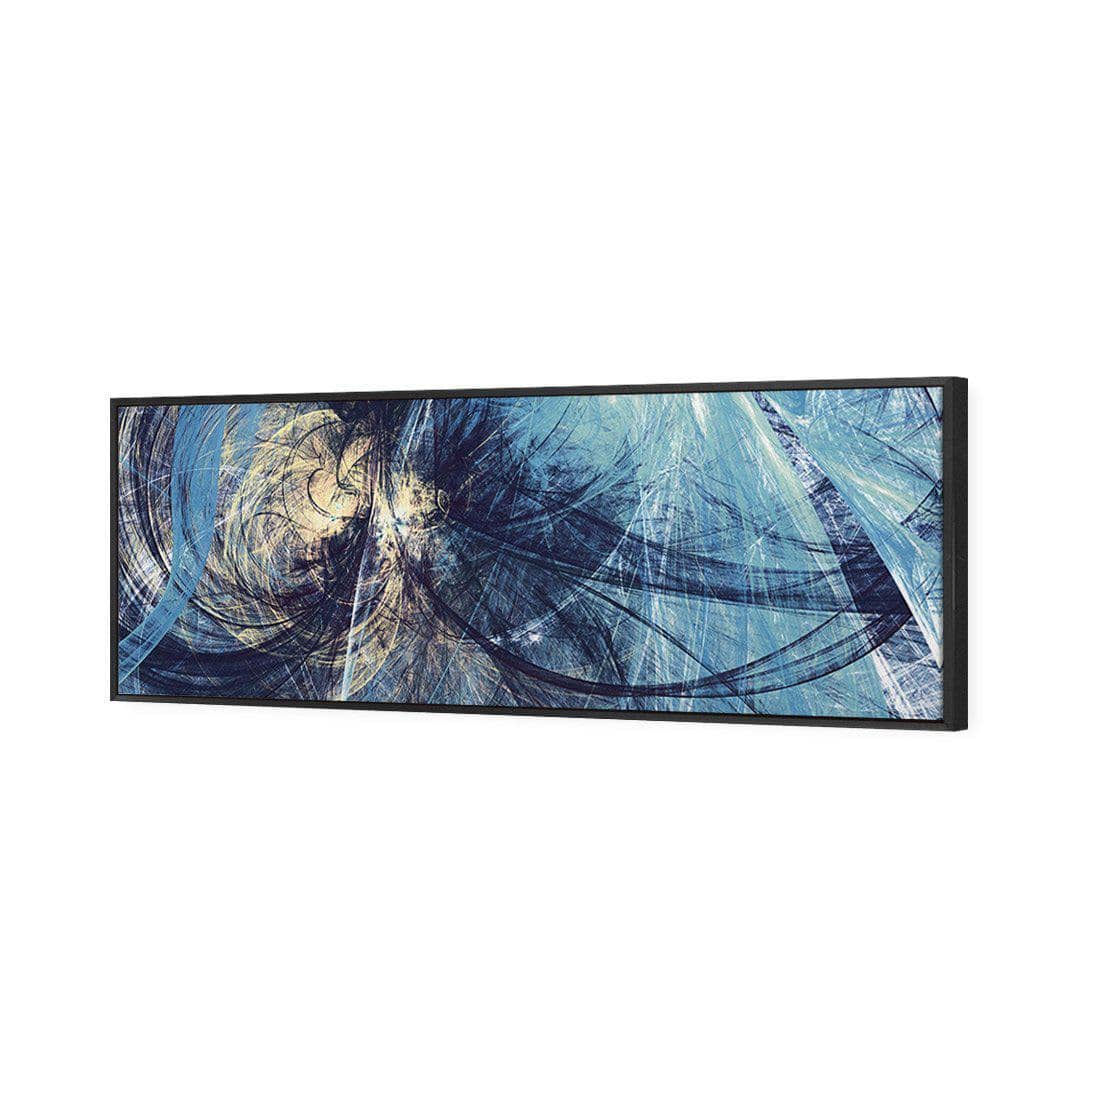 Underwater Peril Canvas Art-Canvas-Wall Art Designs-60x20cm-Canvas - Black Frame-Wall Art Designs